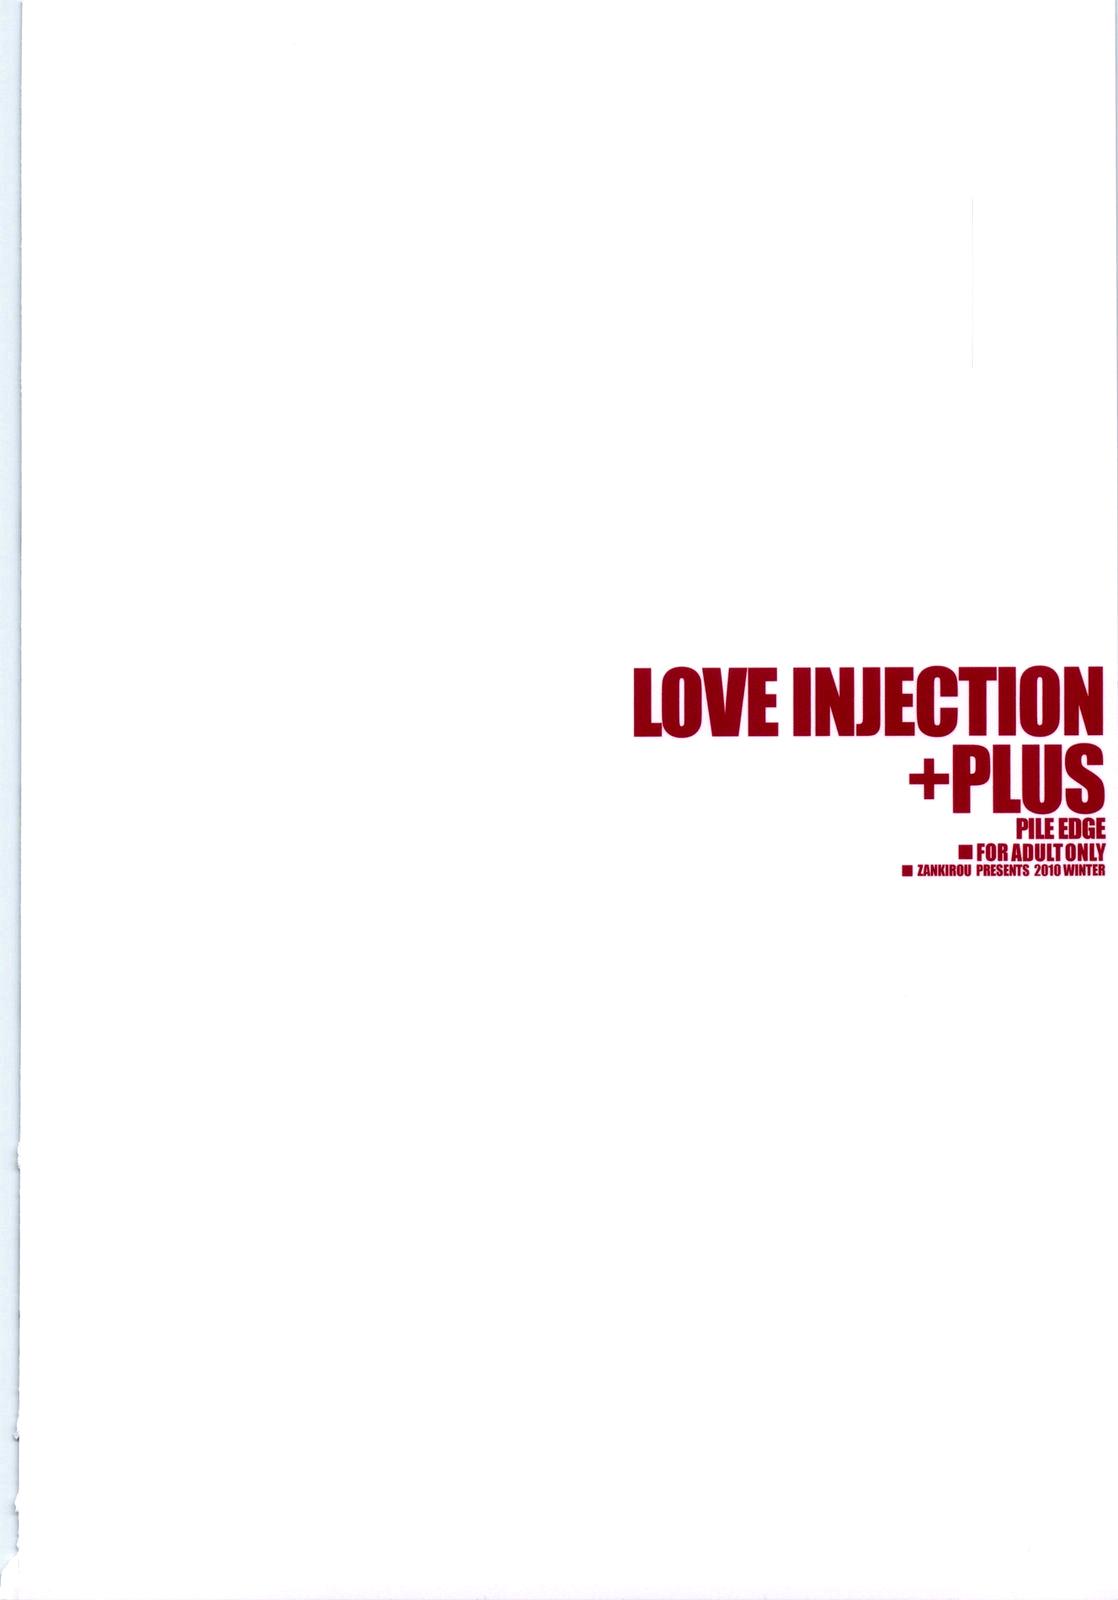 PILE EDGE LOVE INJECTION +PLUS 21